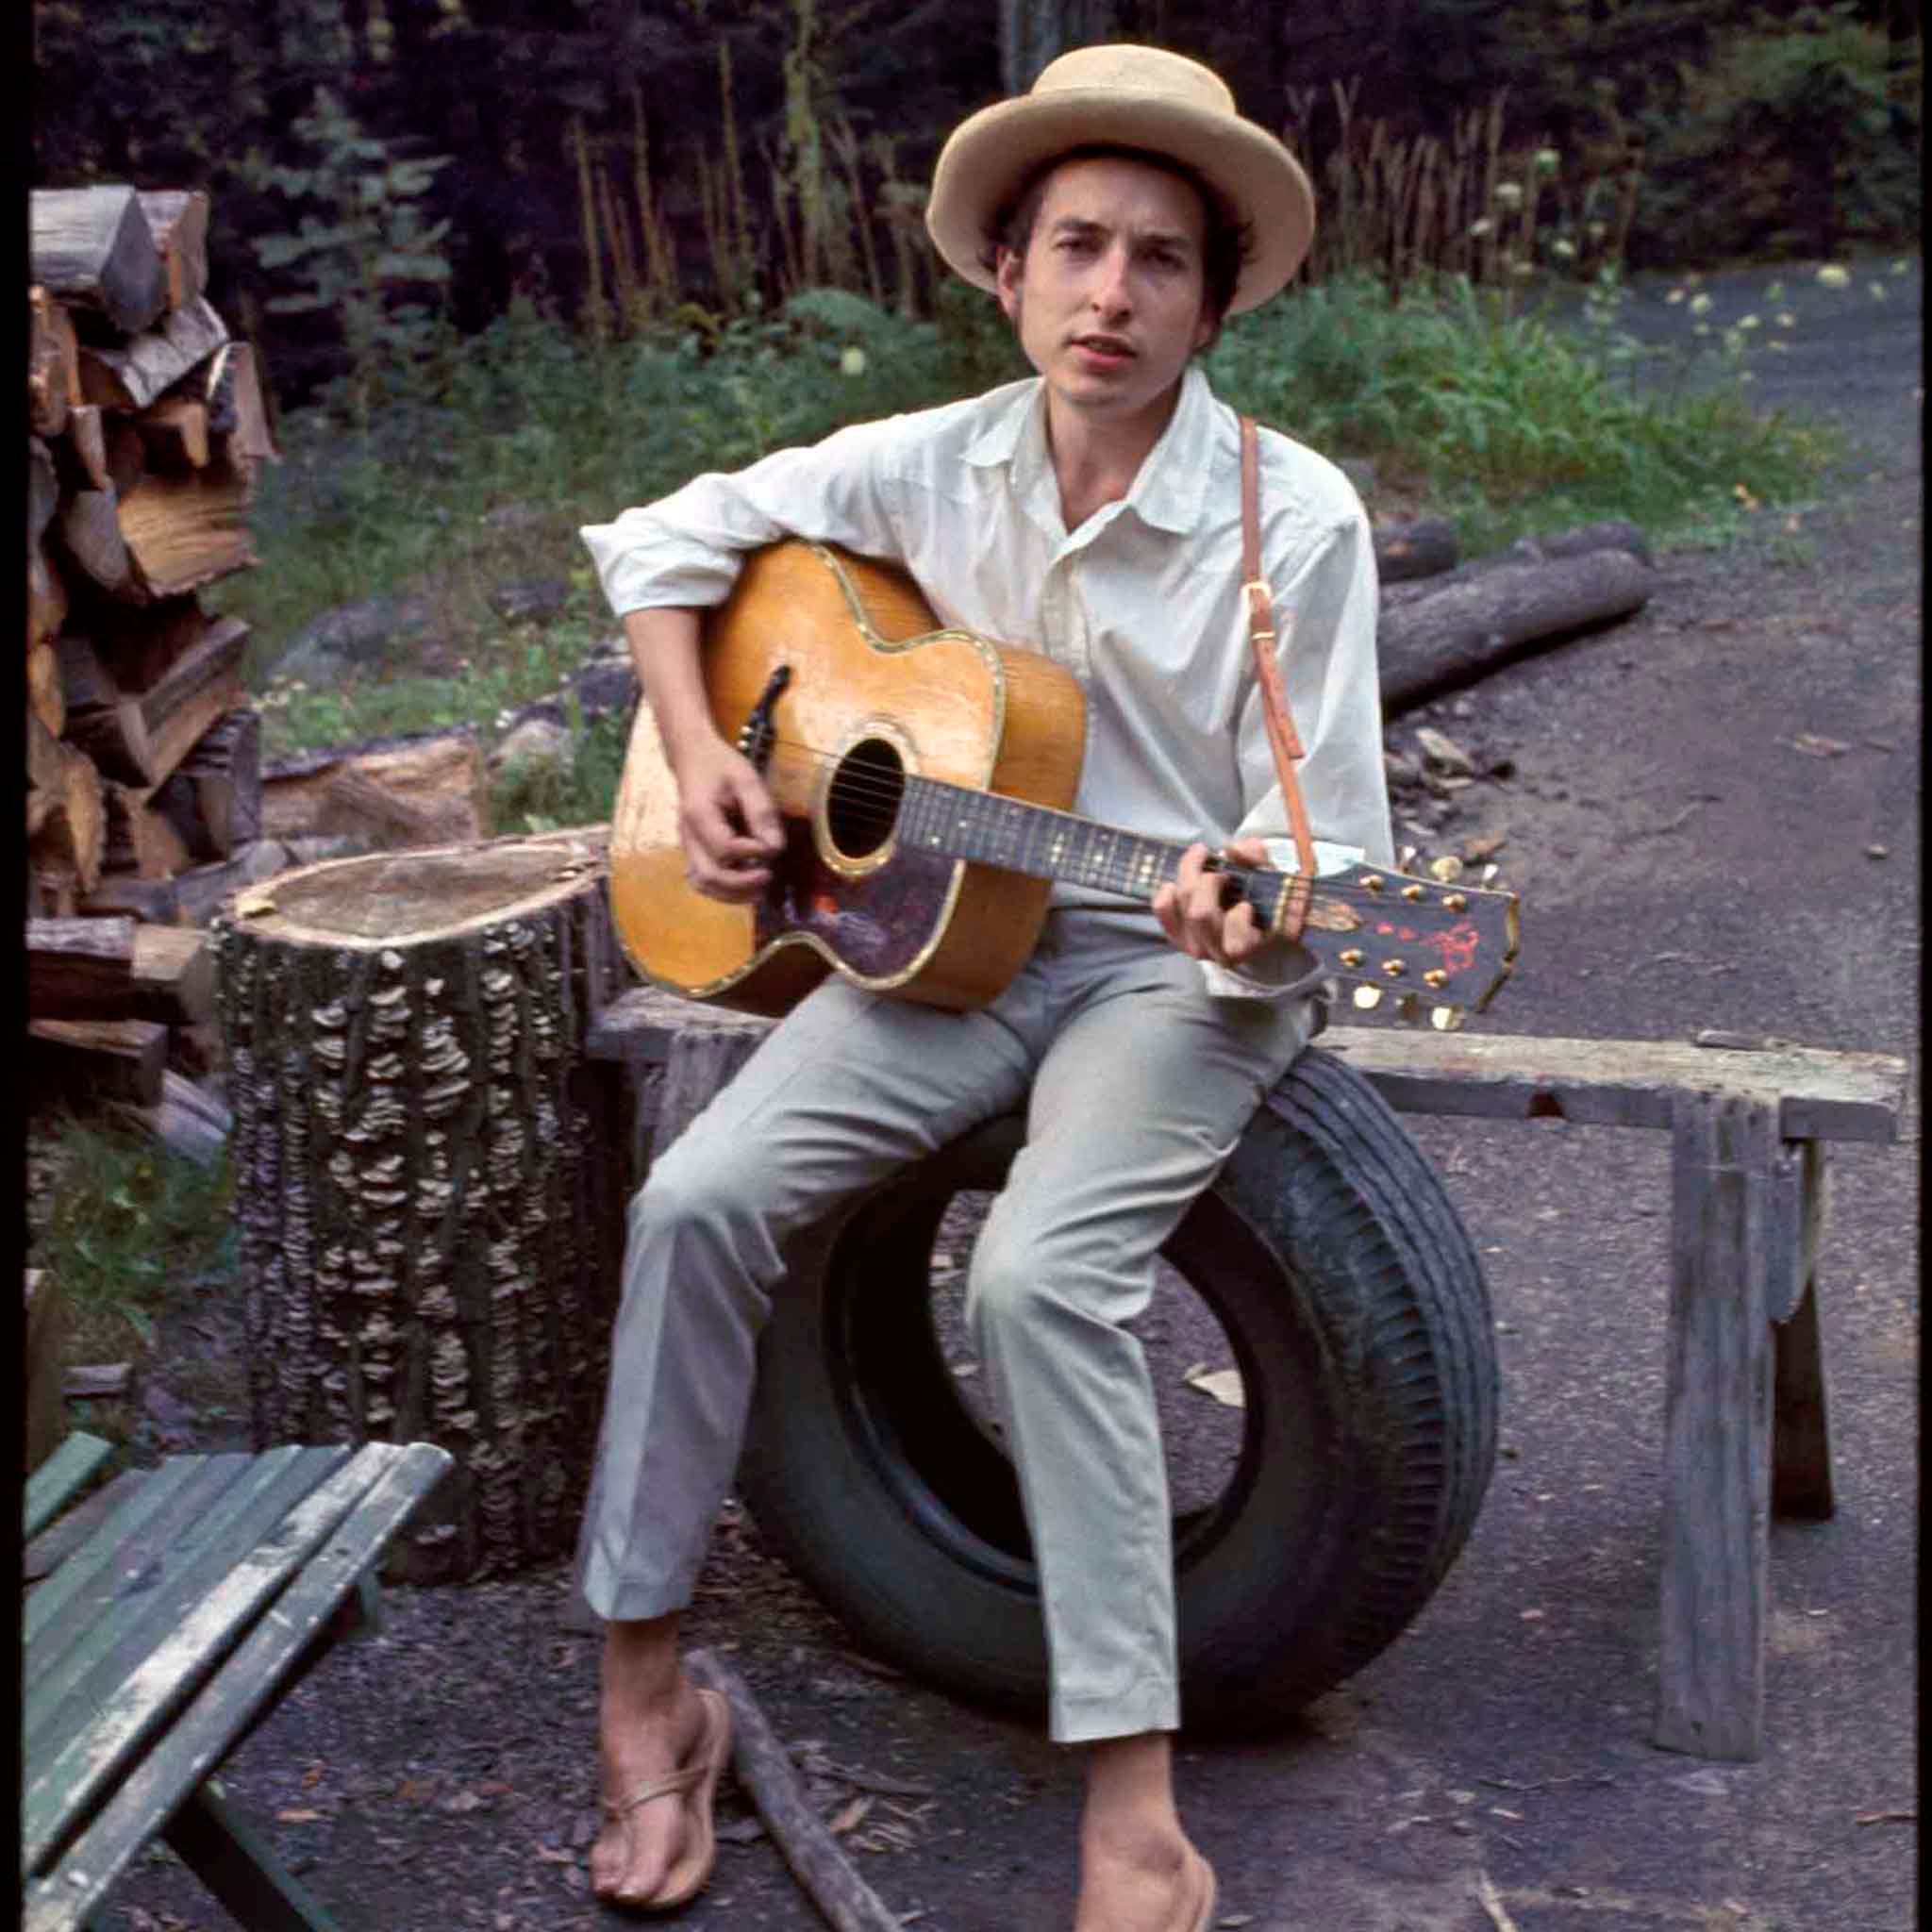 Bob Dylan in 1968